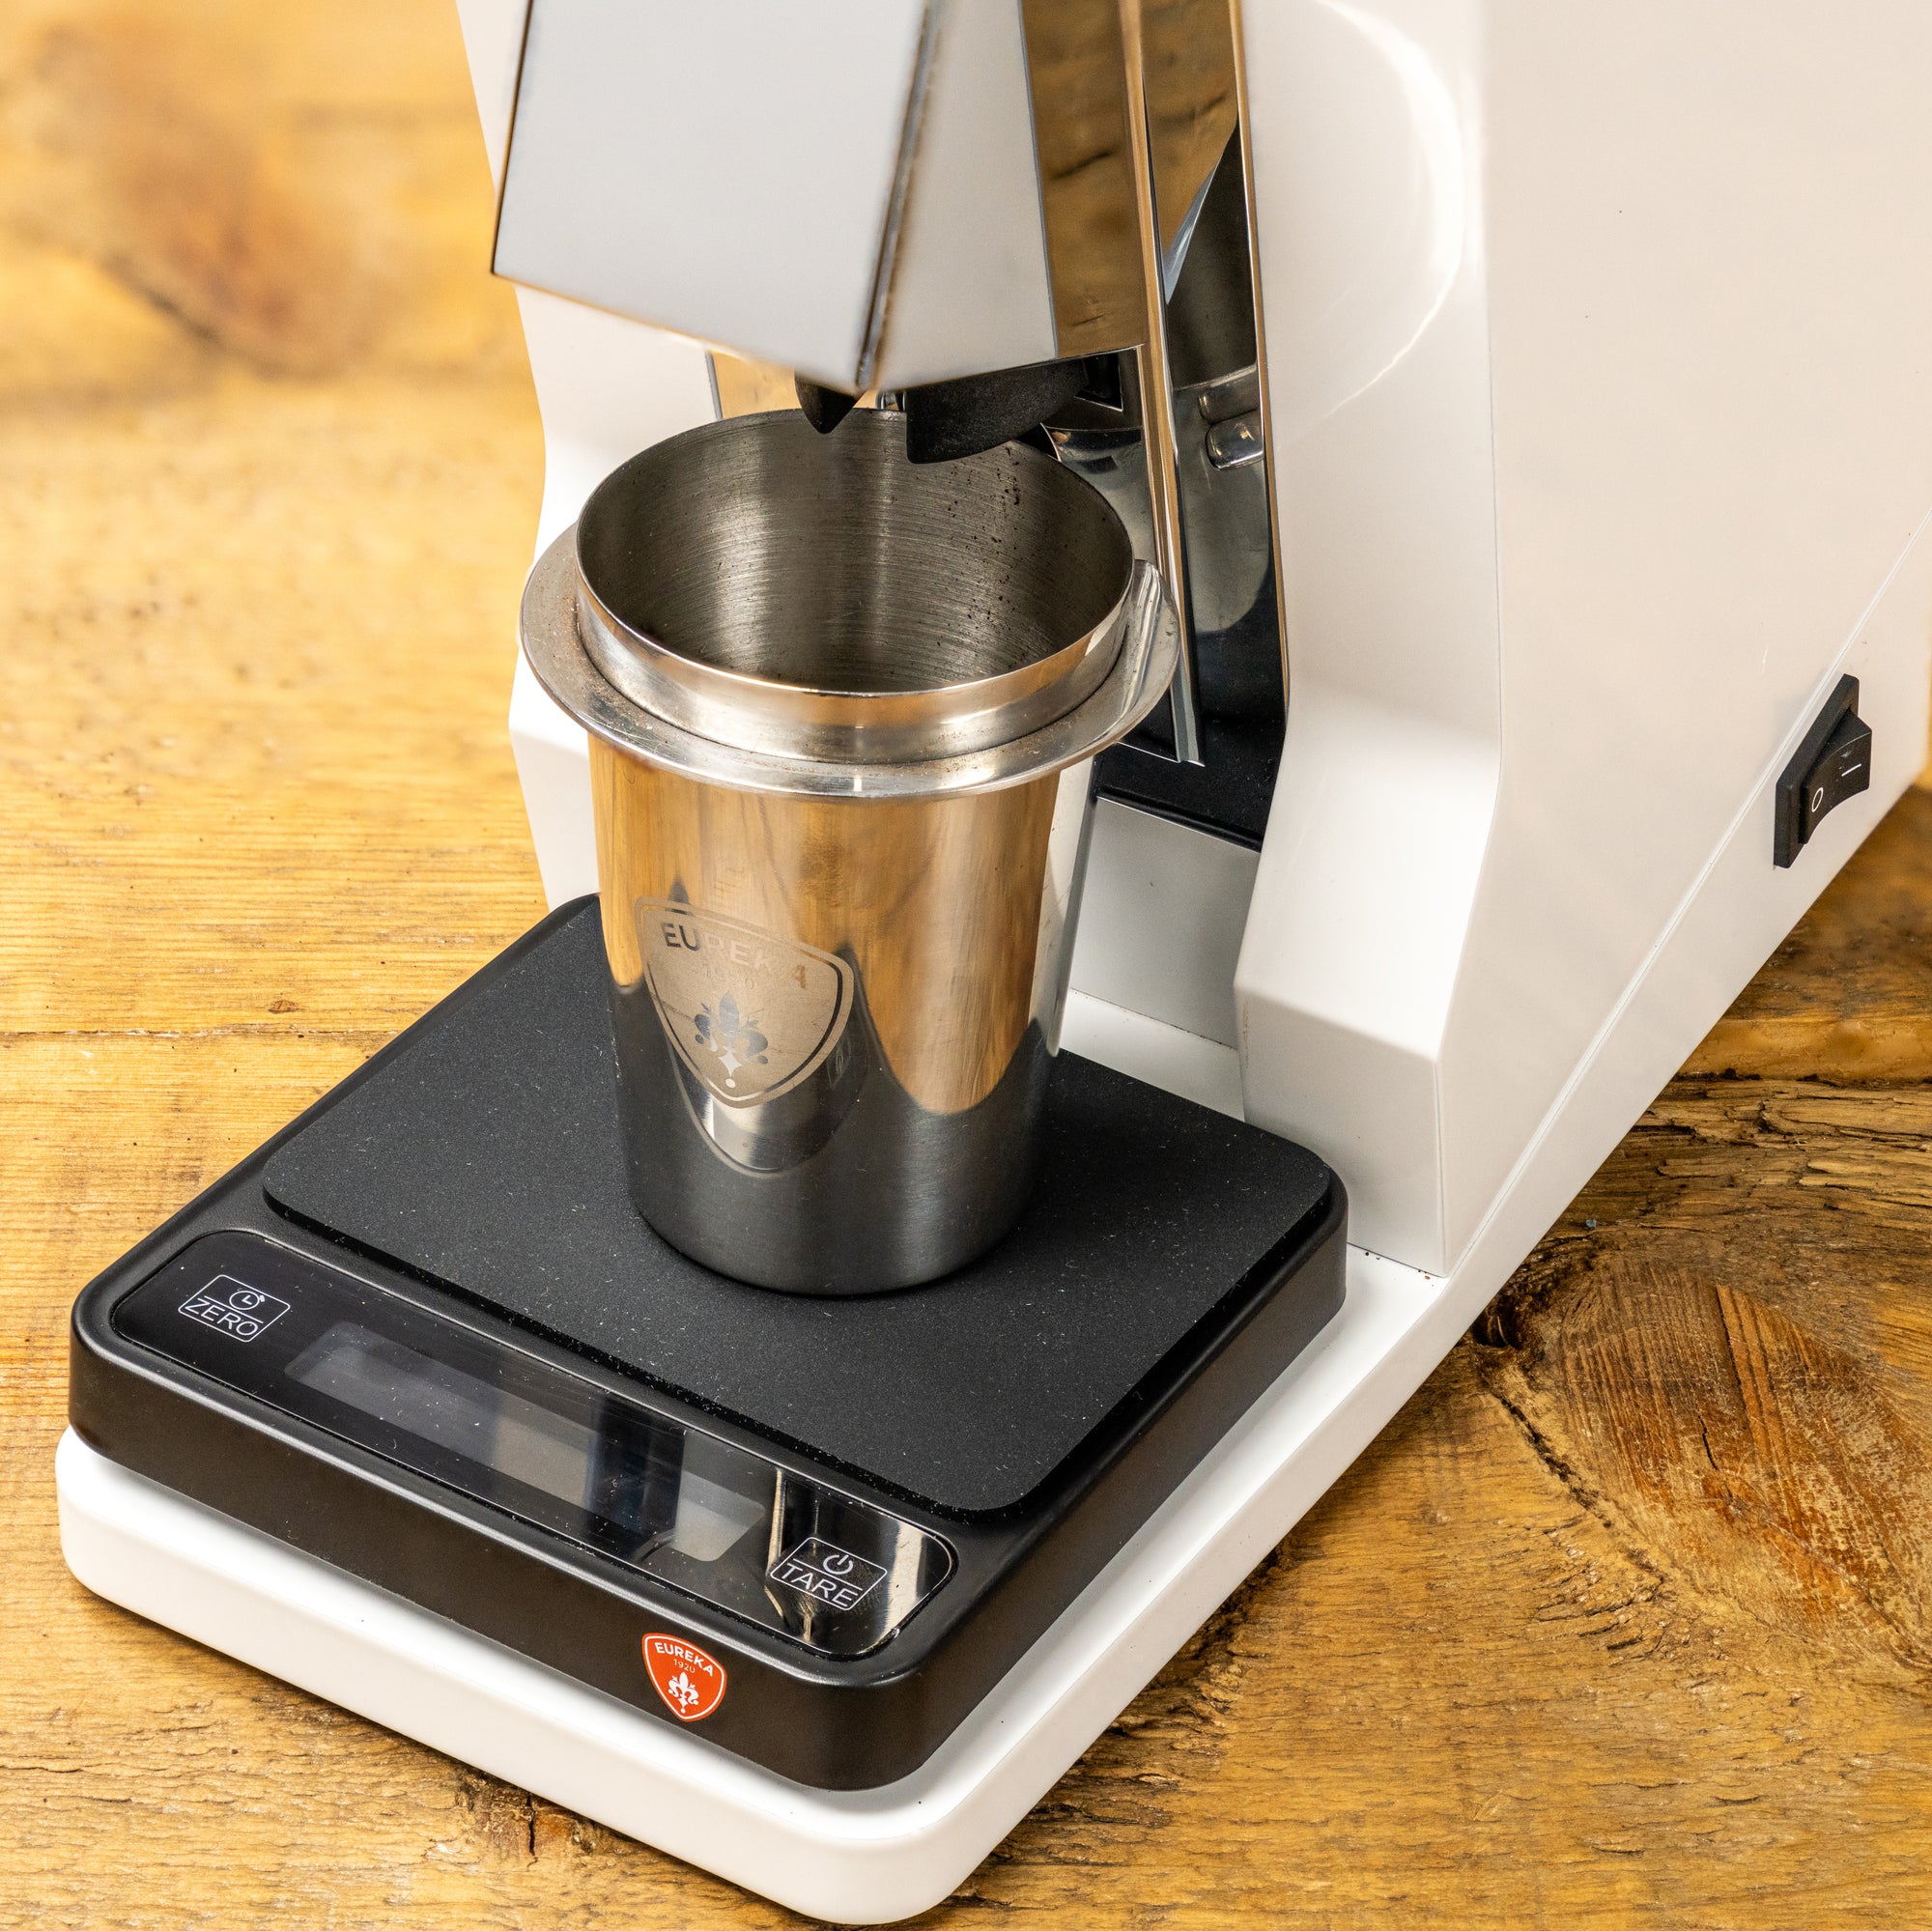 Balance Digitale Eureka Precisa - Espresso Mali Café et Machine à